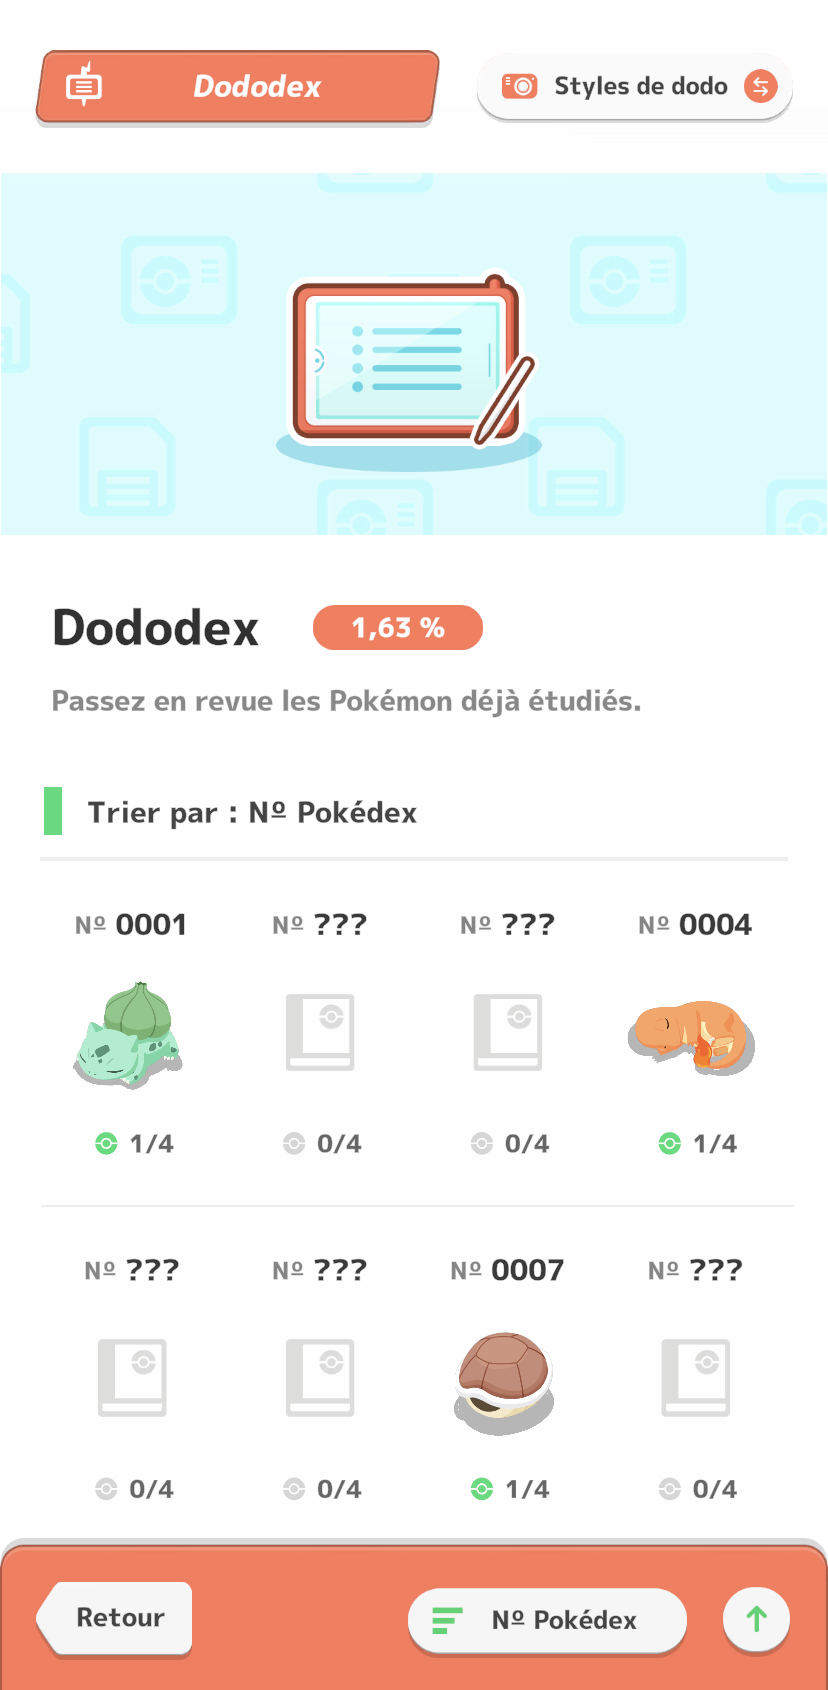 dododex